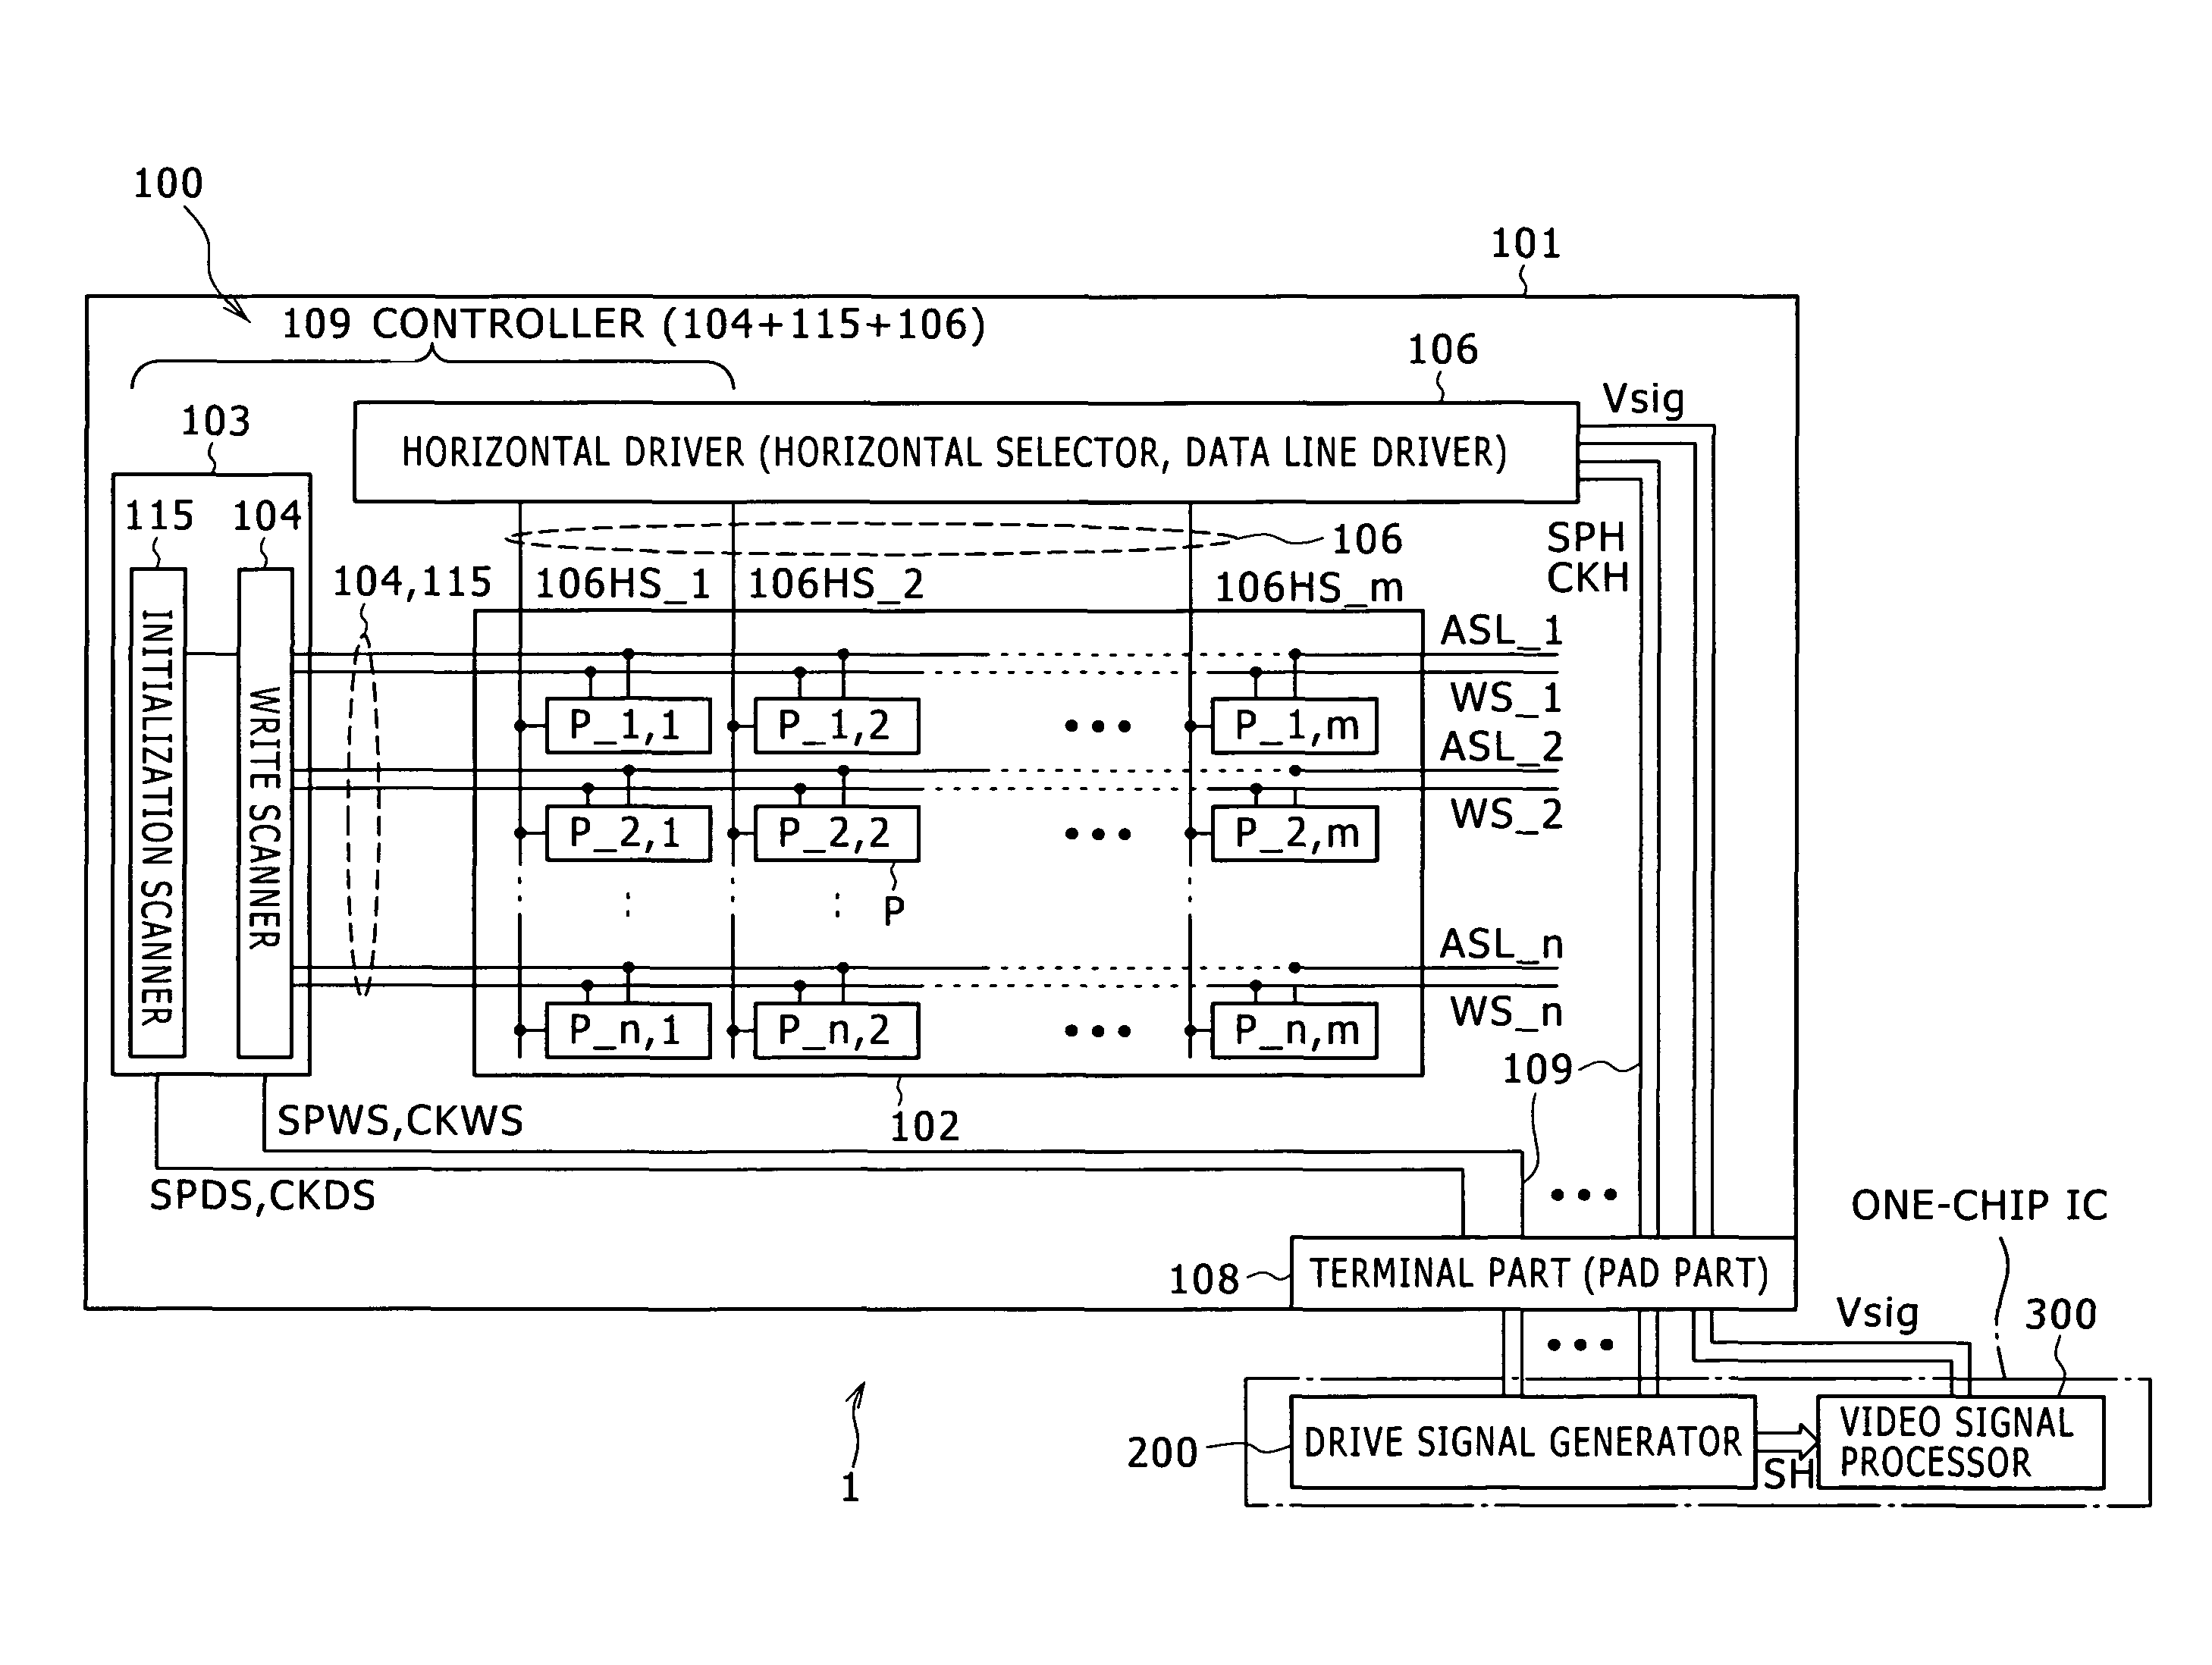 Pixel circuit, display, and method for driving pixel circuit